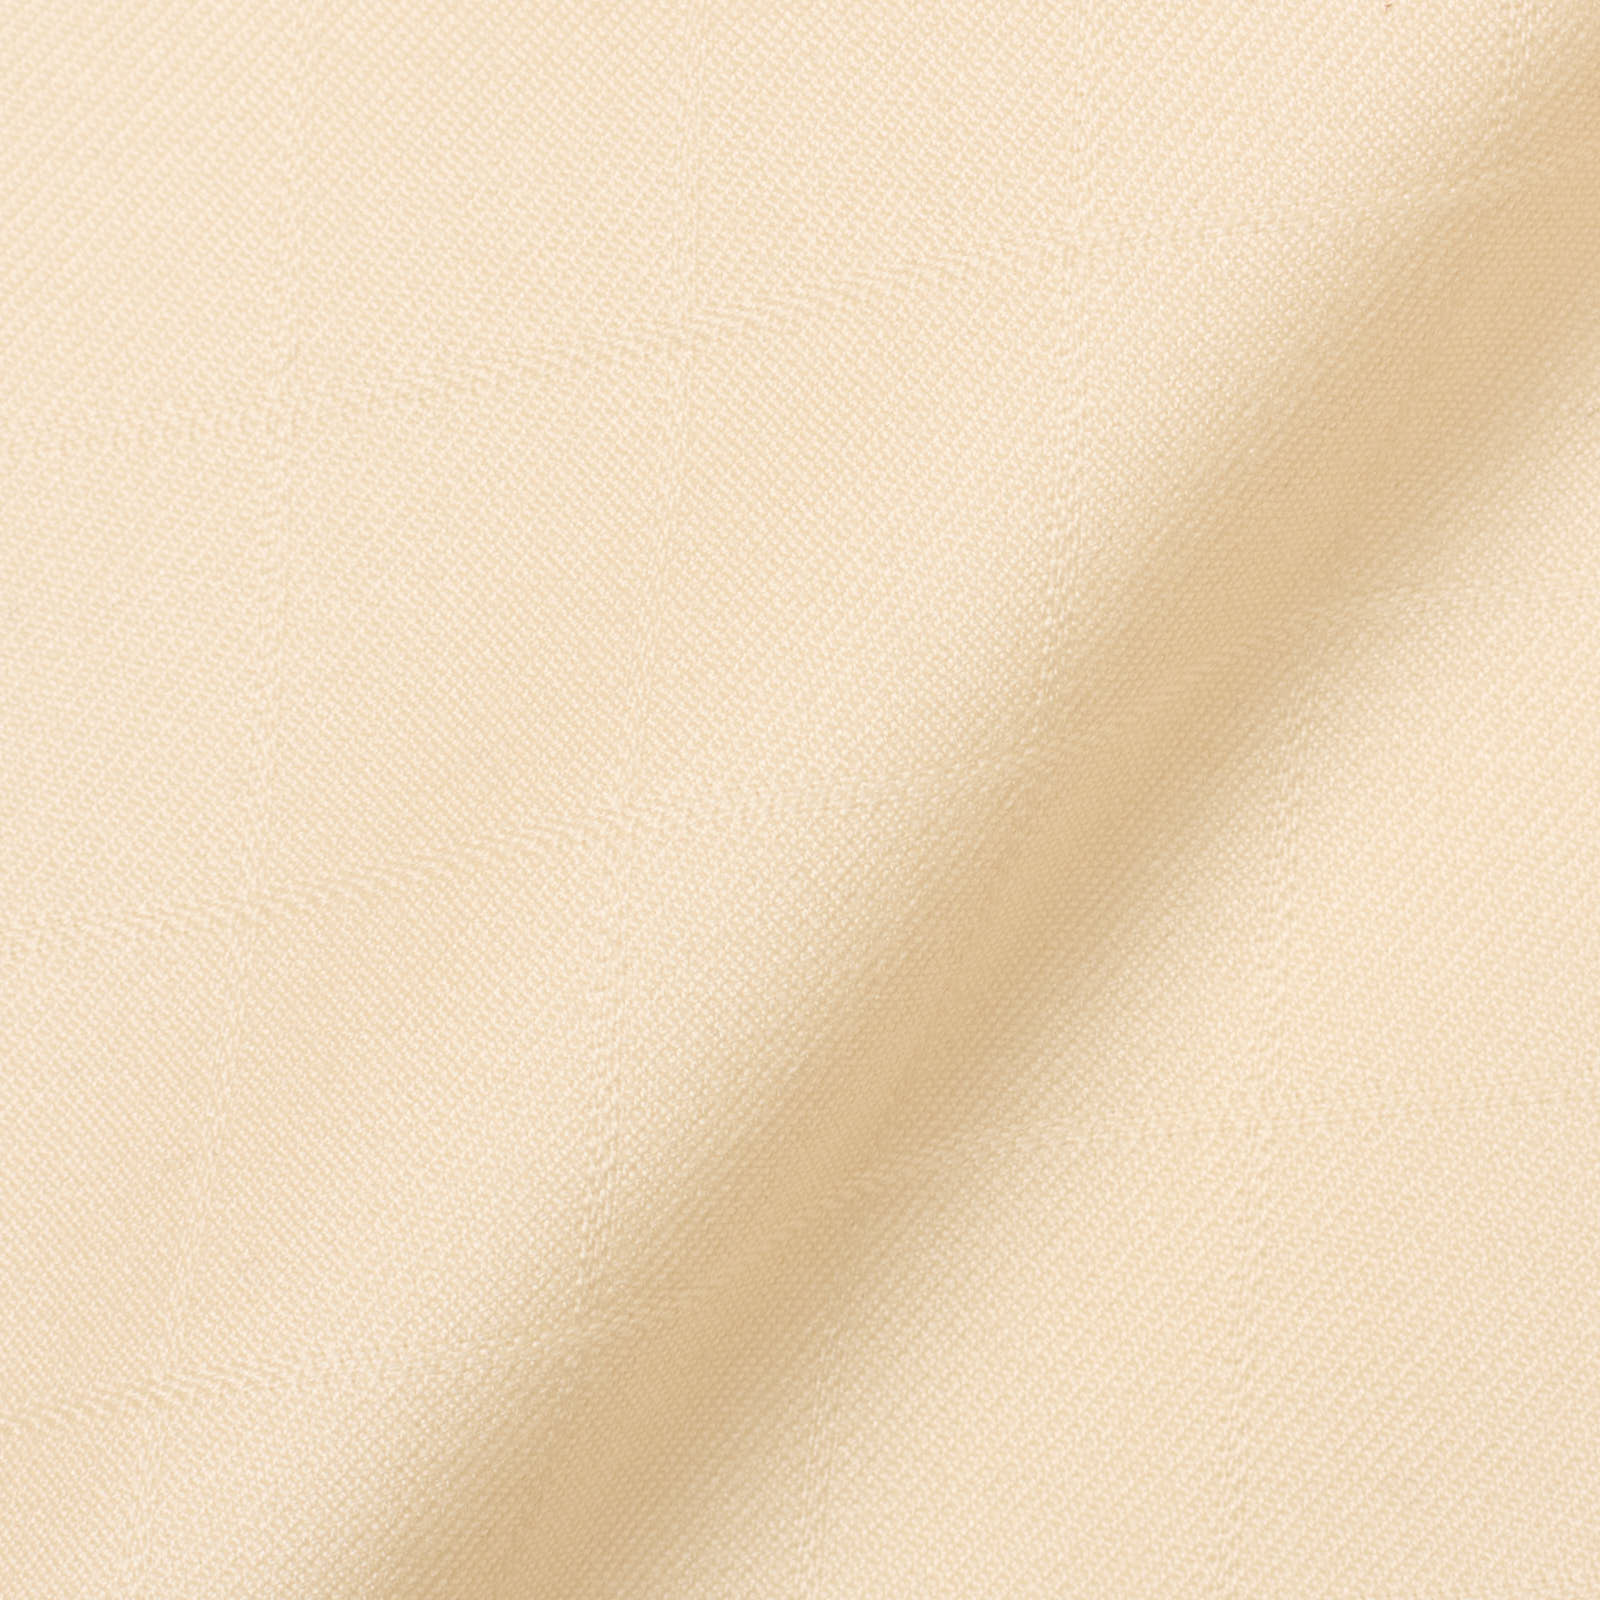 D'AVENZA for VANNUCCI Light Beige Windowpane Cashmere-Silk Jacket NEW